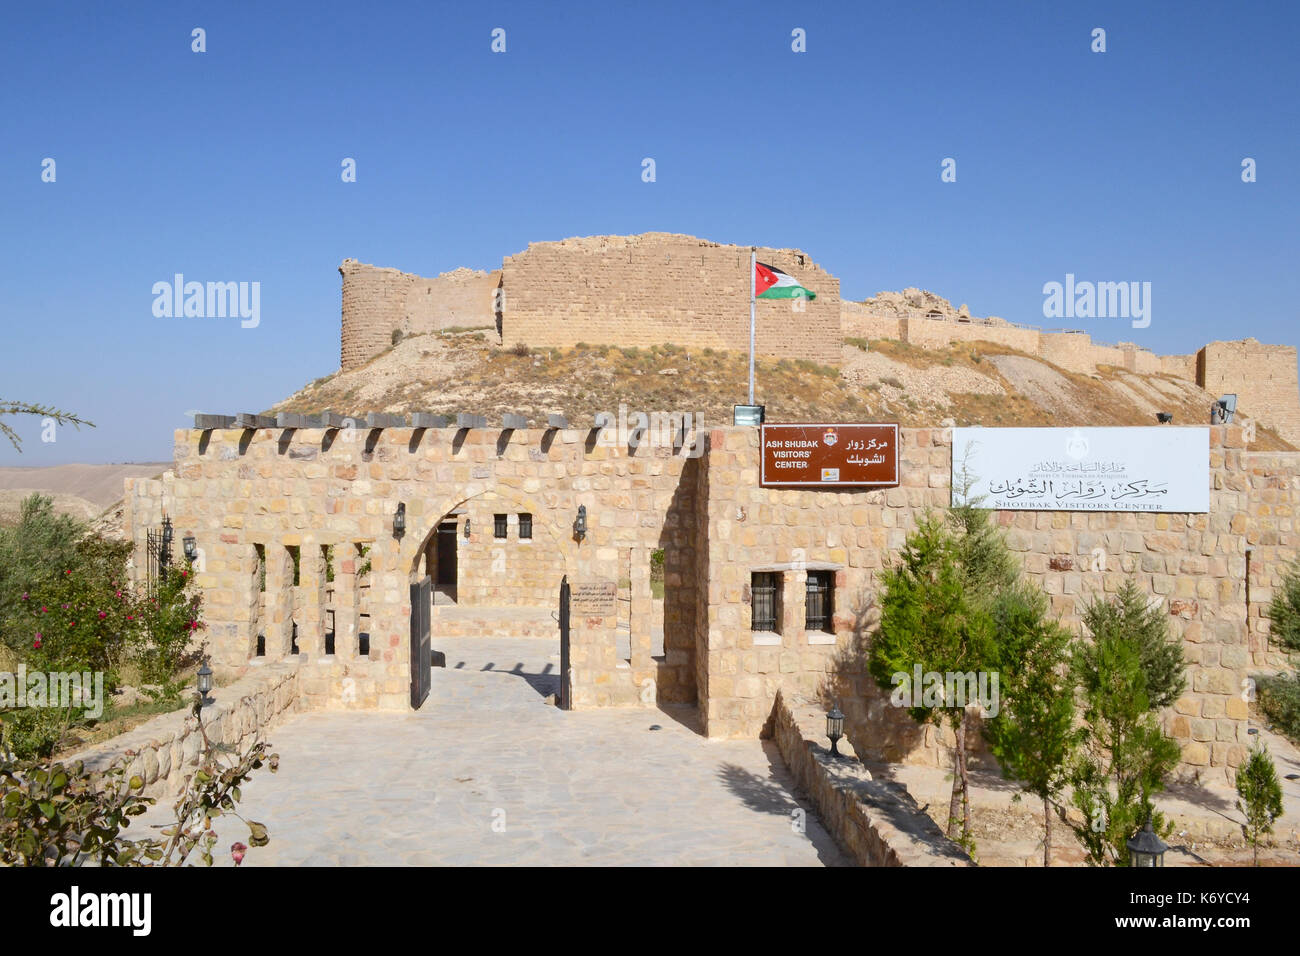 Ash Shubak Schloss Visitors Center, Jordanien. Das Schloss ist ein beliebter Zwischenstopp auf dem Weg nach Petra. Stockfoto